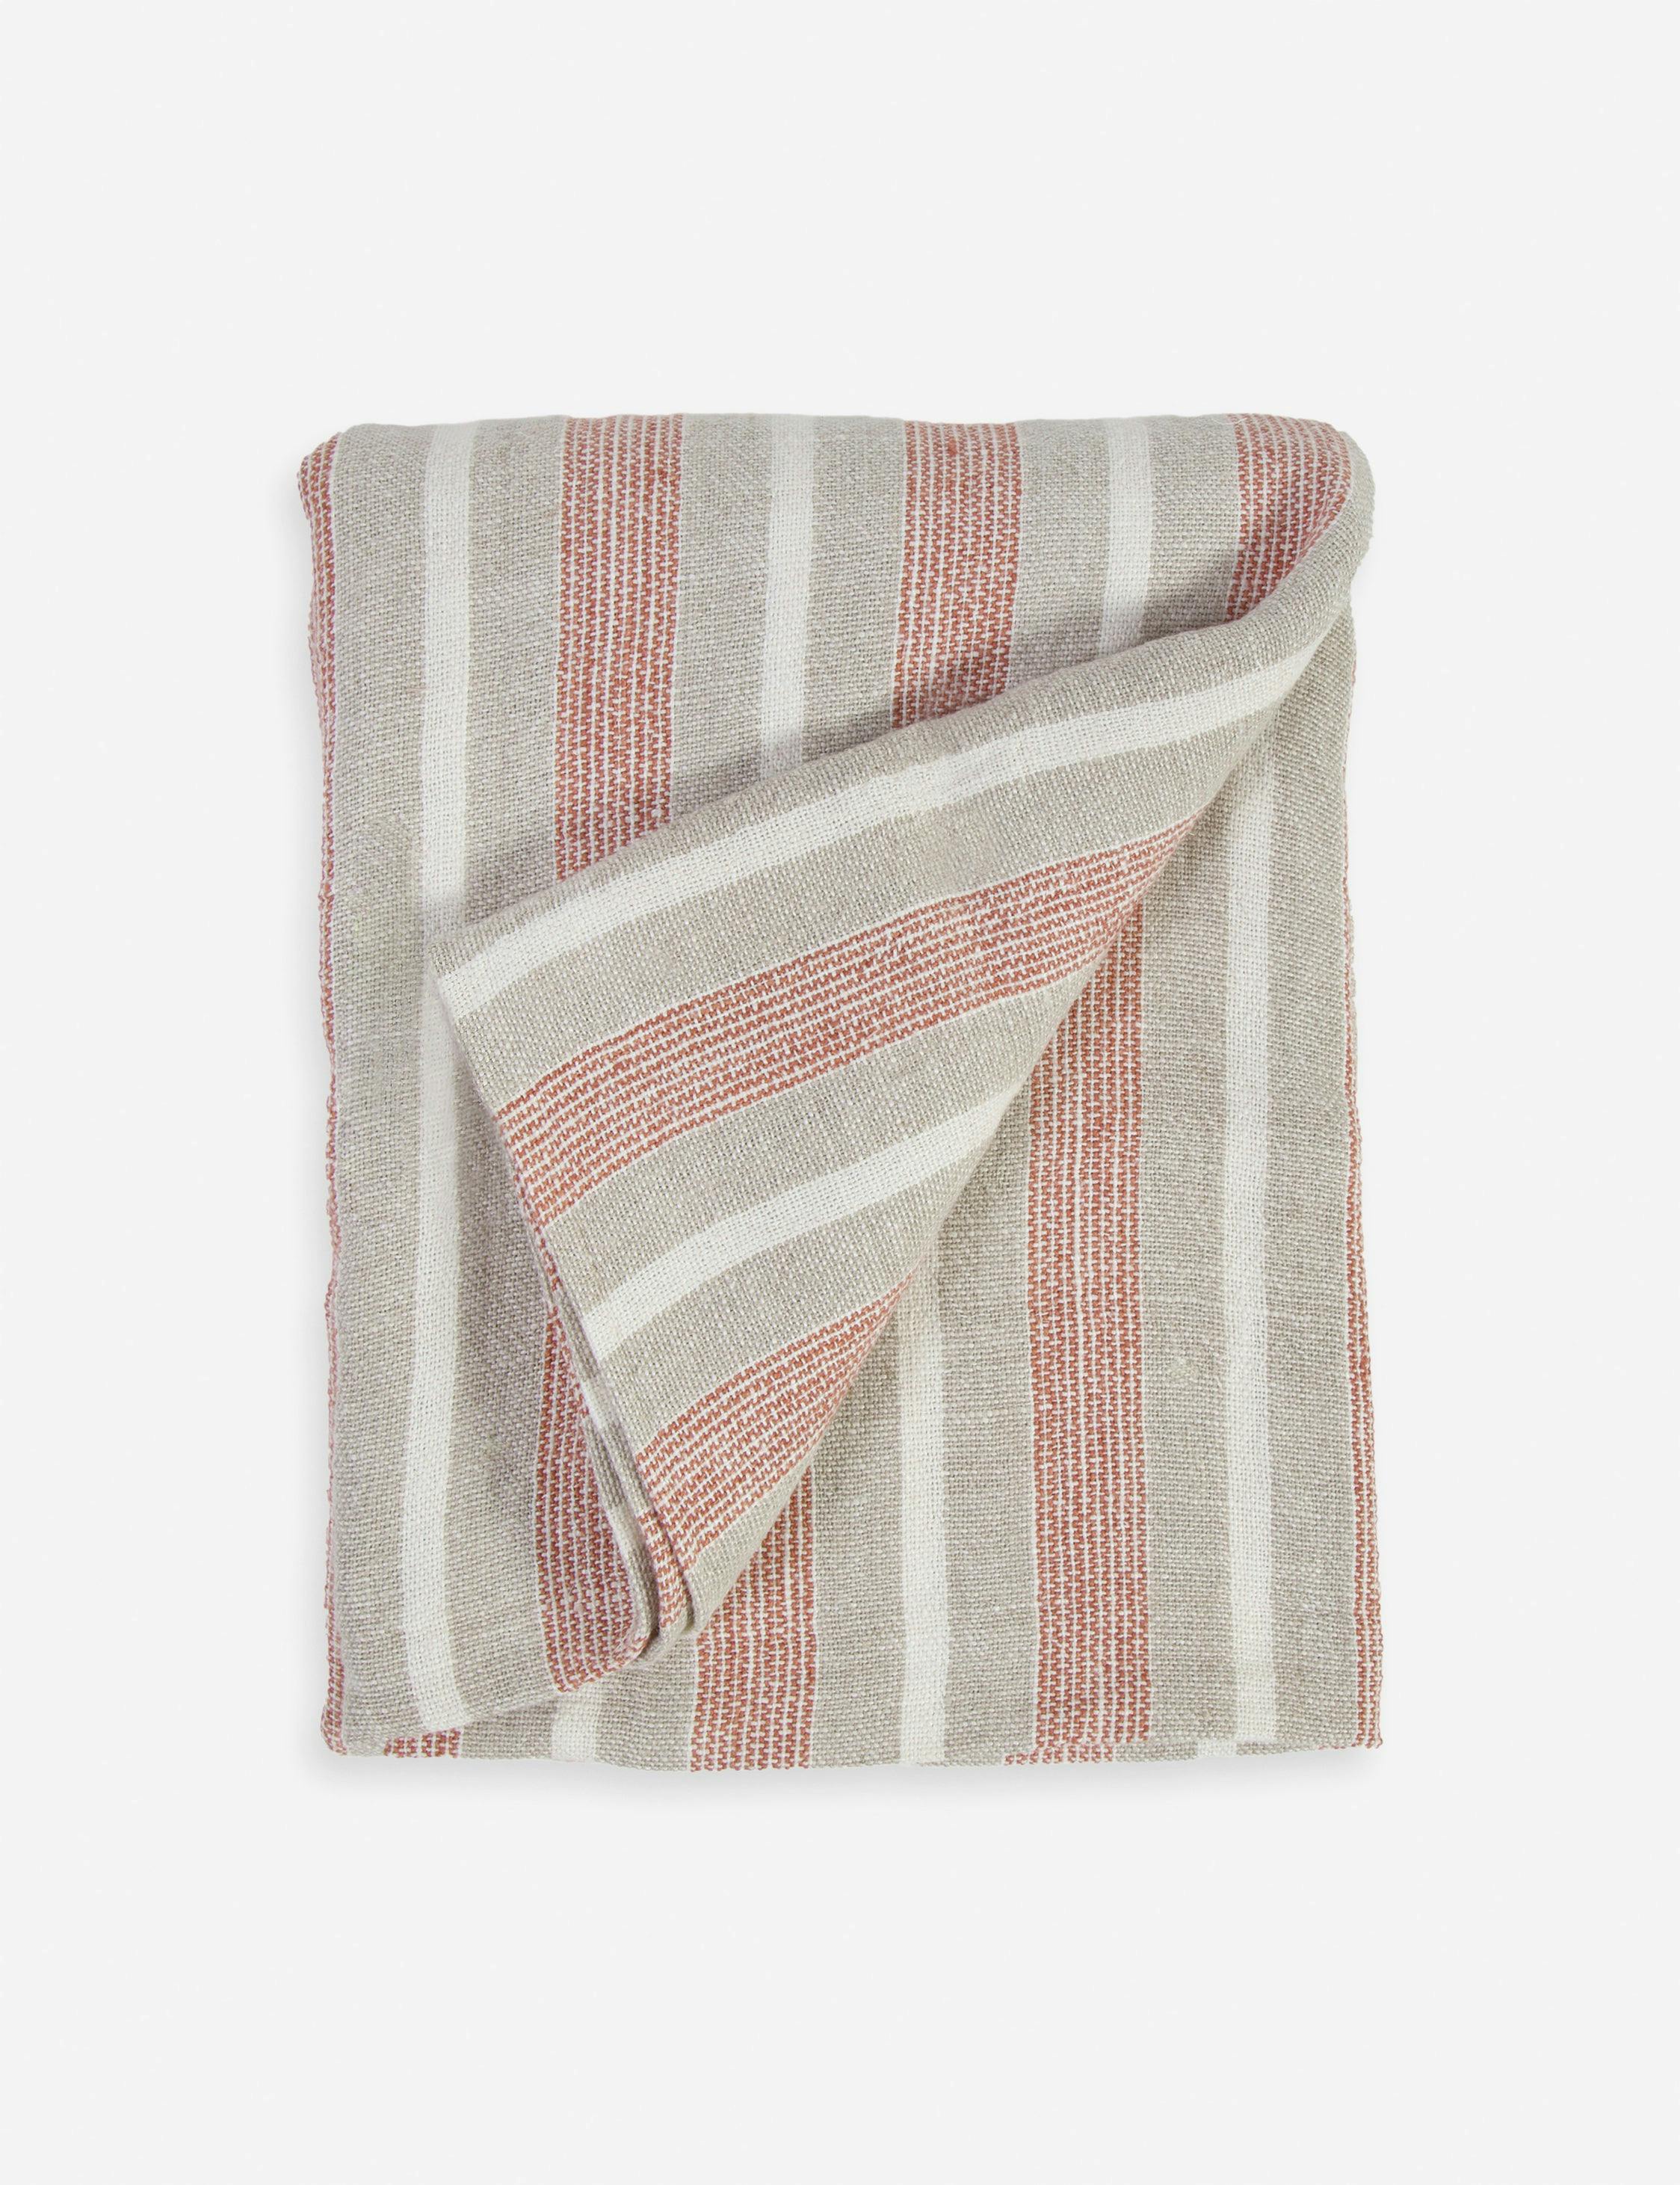 Montecito Queen-Size Cozy Knitted Linen Blend Blanket